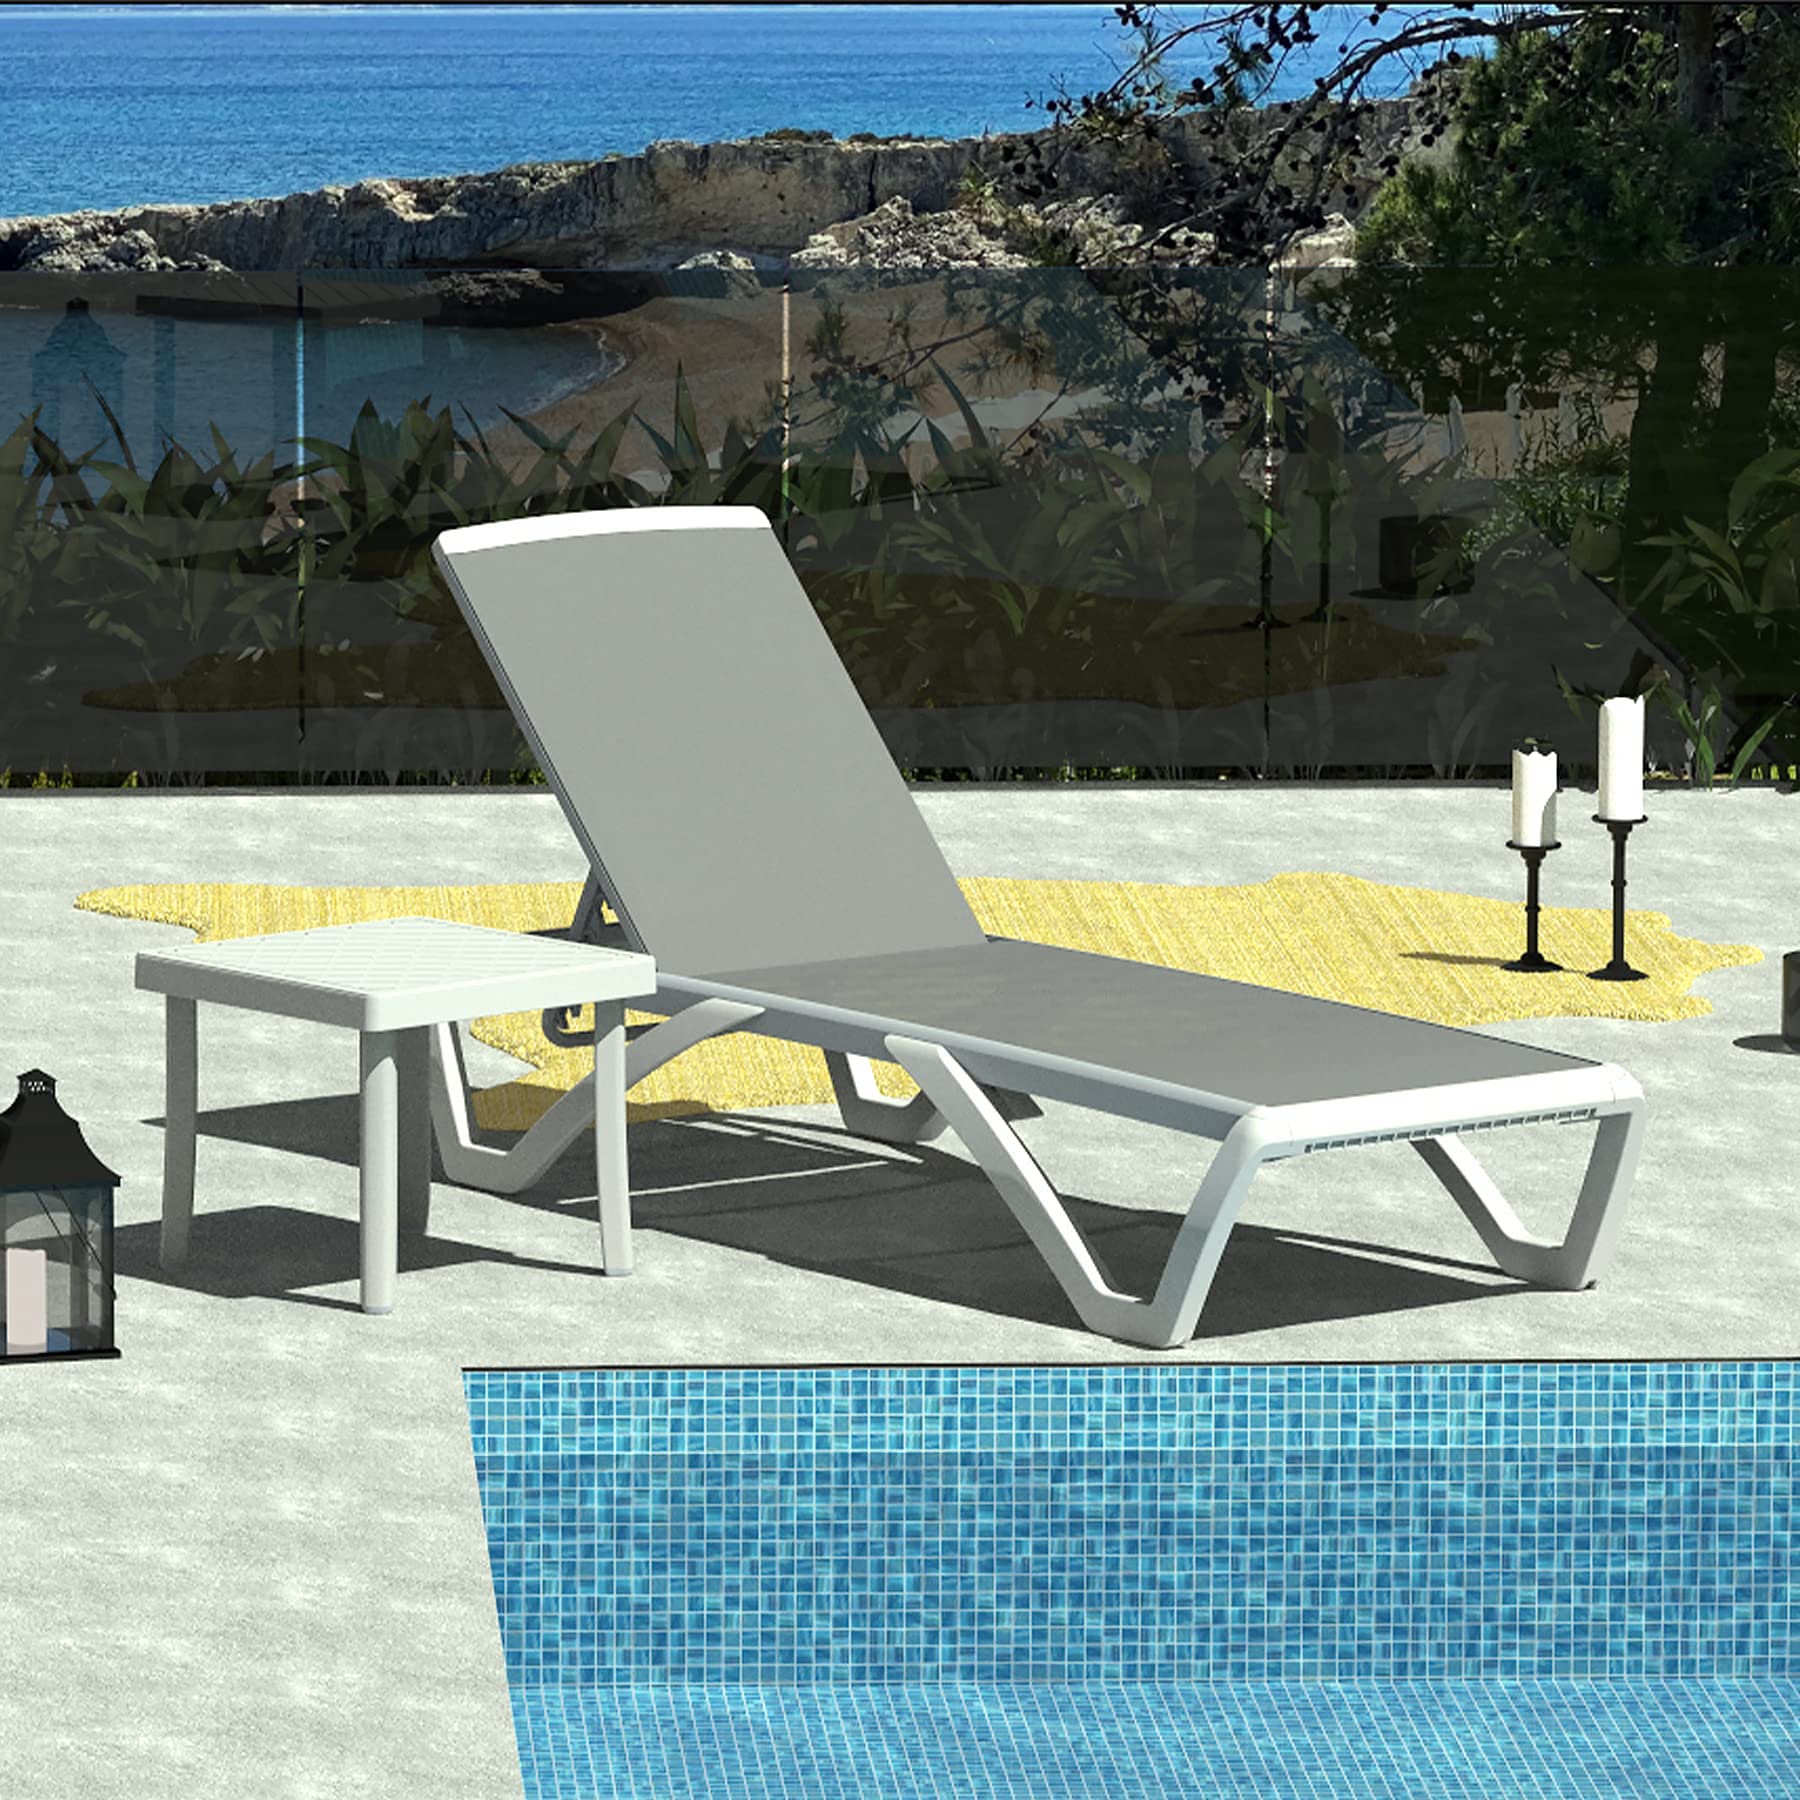 Mydepot Domi Patio Chaise Lounge, Outdoor Aluminum, Polypropylene, Adjustable Backrest, Beach Chair - image 3 of 7